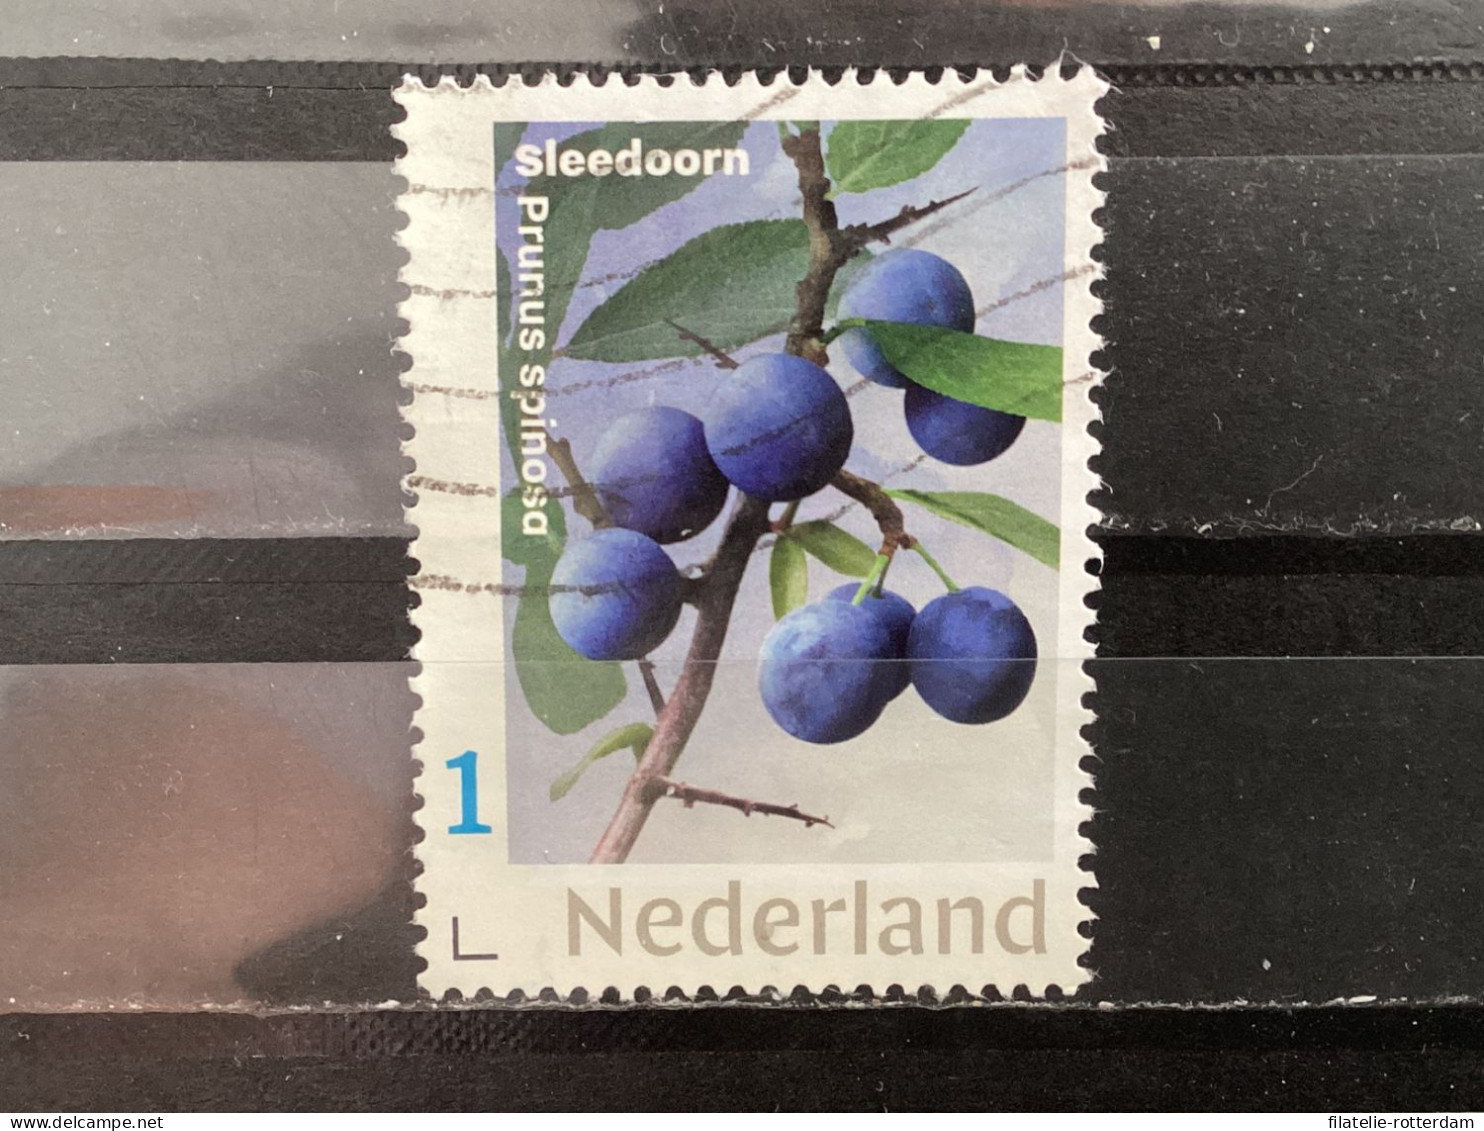 The Netherlands / Nederland - Fruit, Sleedoorn 2021 - Usati